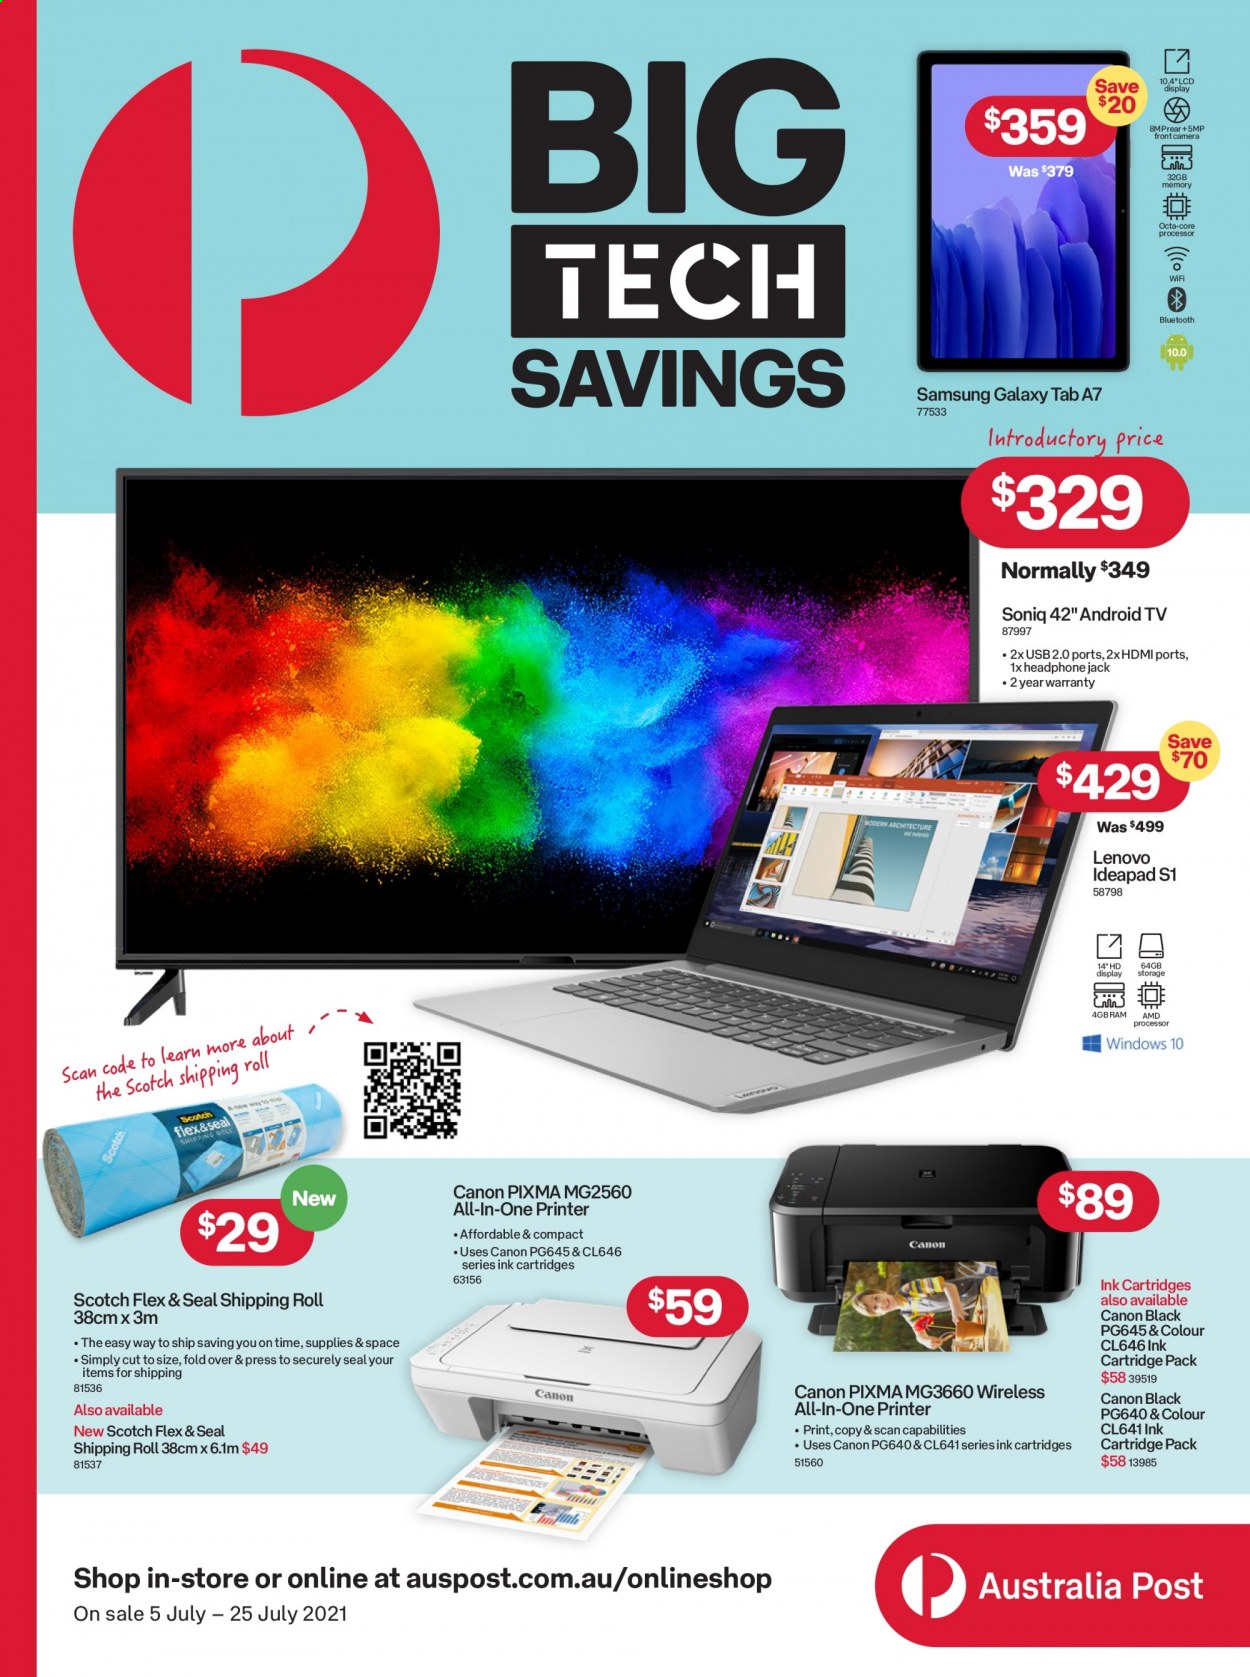 thumbnail - Australia Post Catalogue - 5 Jul 2021 - 25 Jul 2021 - Sales products - Lenovo, Samsung Galaxy, Samsung Galaxy Tab, Samsung, Canon, Android TV, TV, headphones, all-in-one printer, printer, cartridge. Page 1.